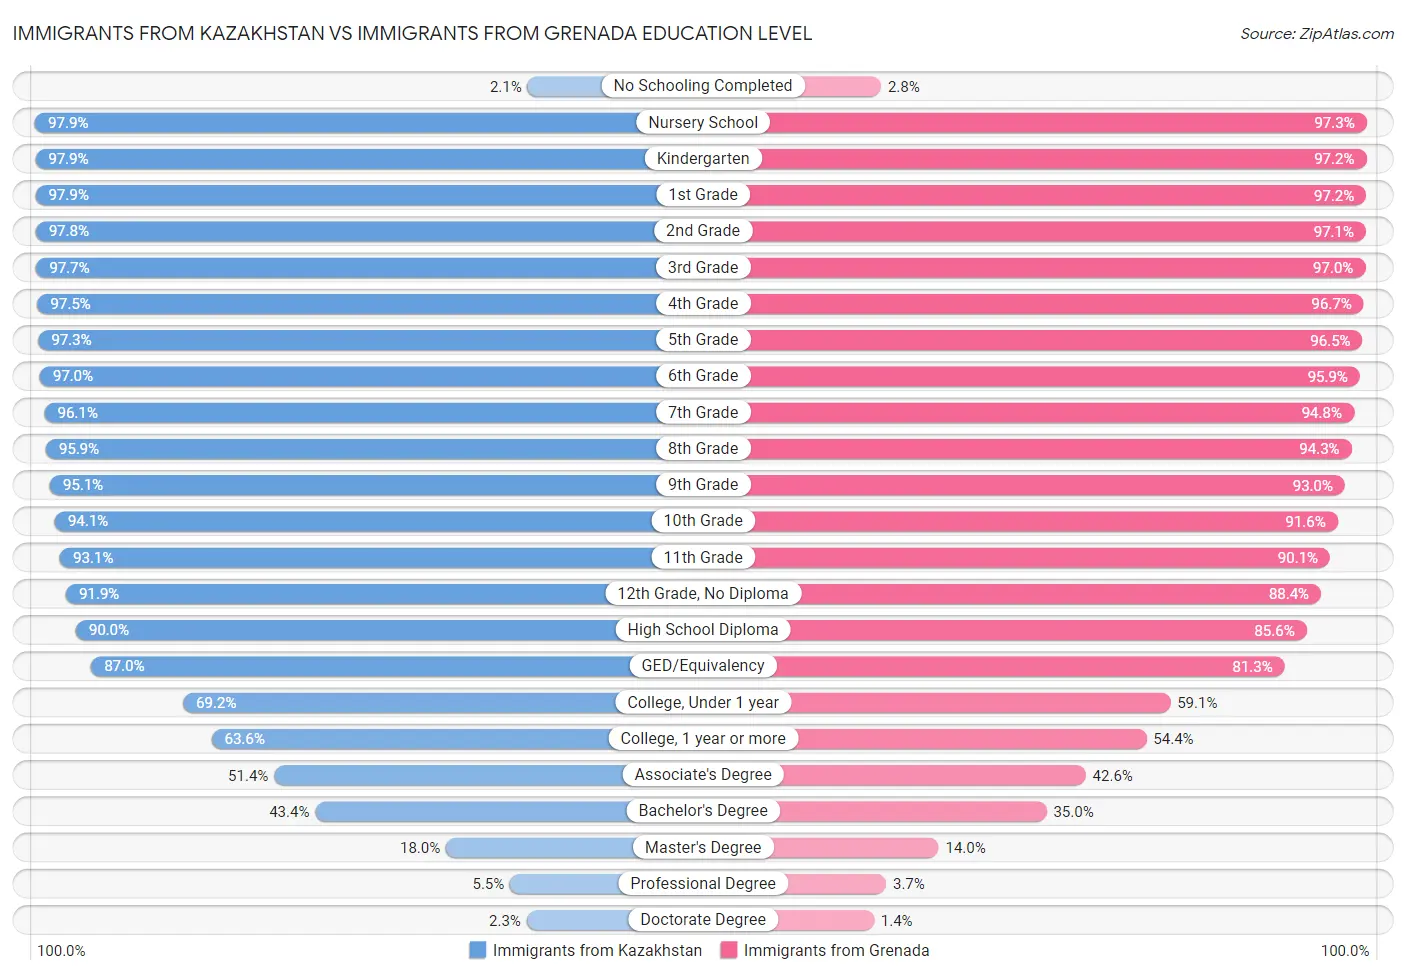 Immigrants from Kazakhstan vs Immigrants from Grenada Education Level